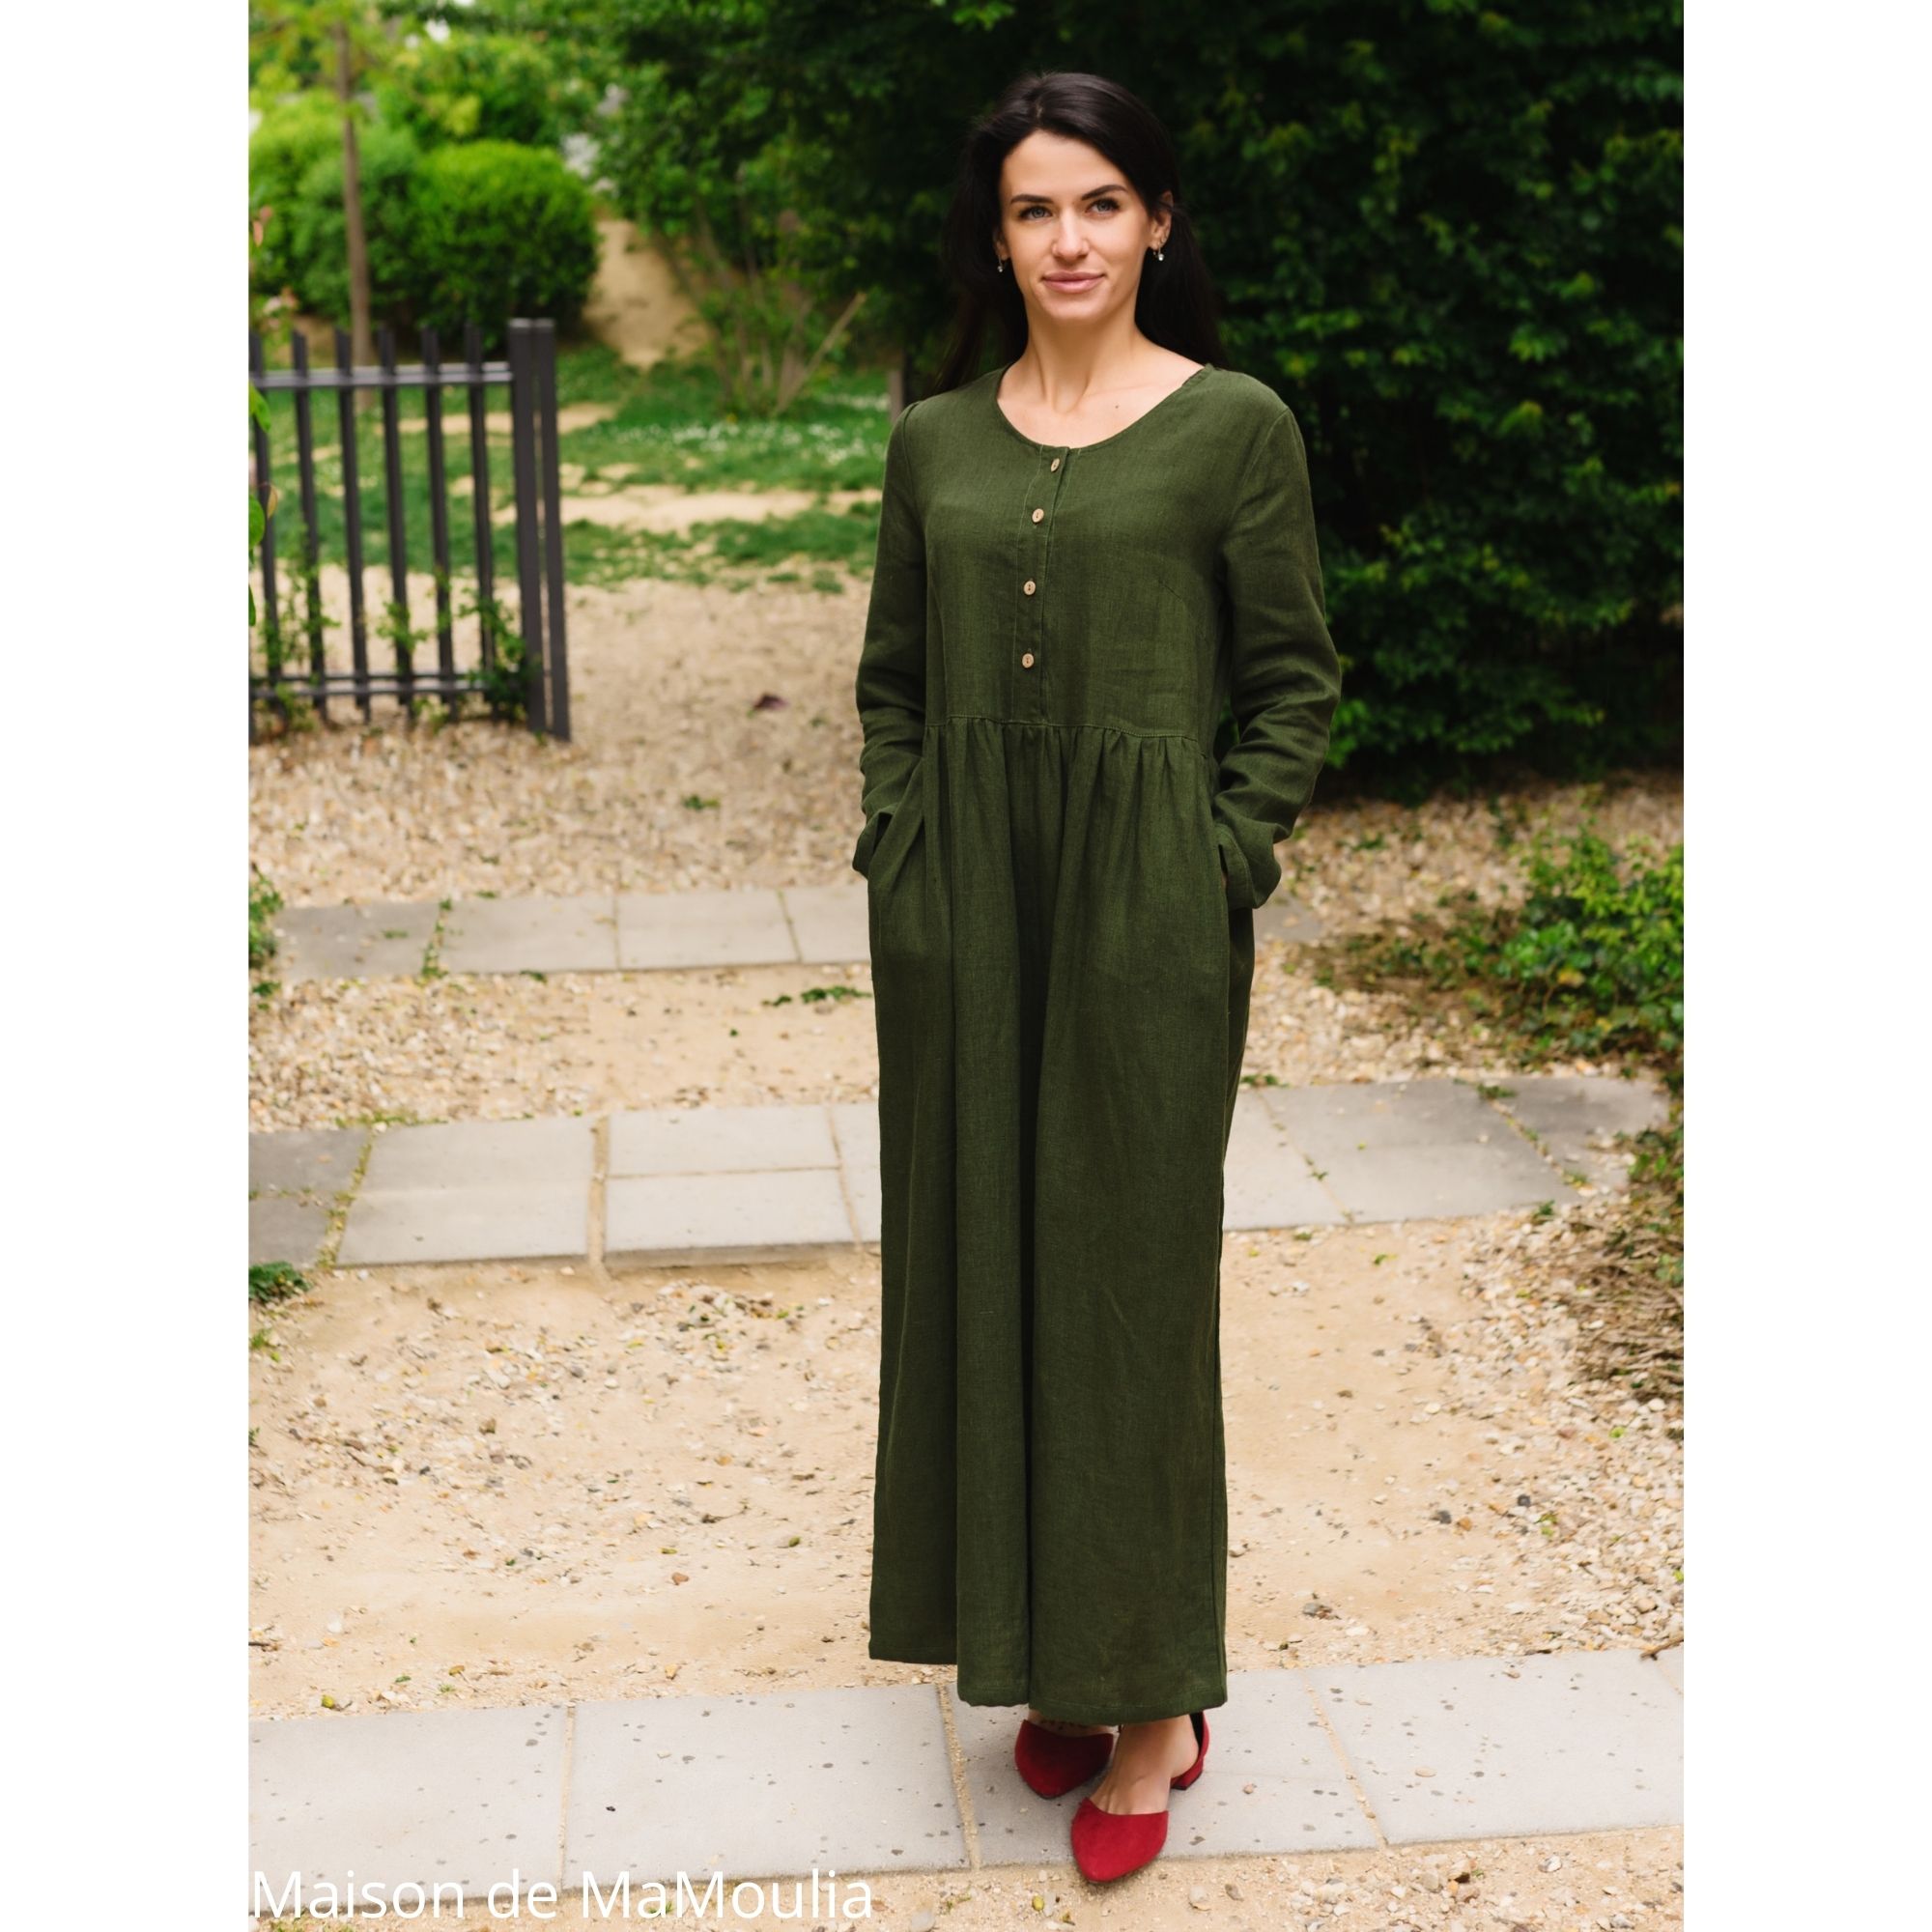 SIMPLY GREY - Robe très longue Boho femme - 100% lin lavé - Vert